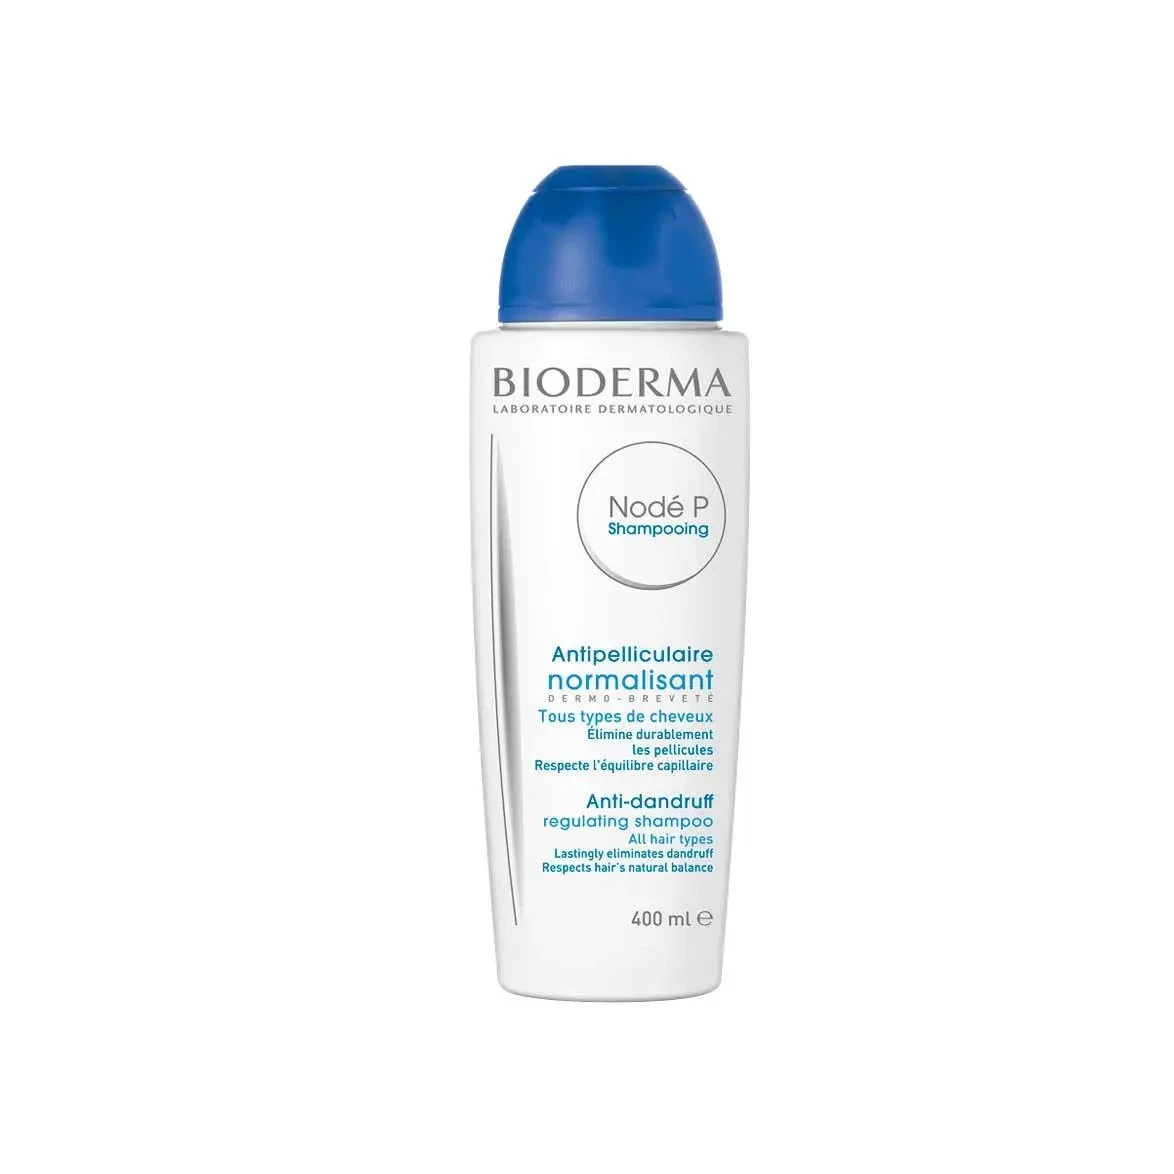 BIODERMA - Nodé P Shampoo | 400 mL